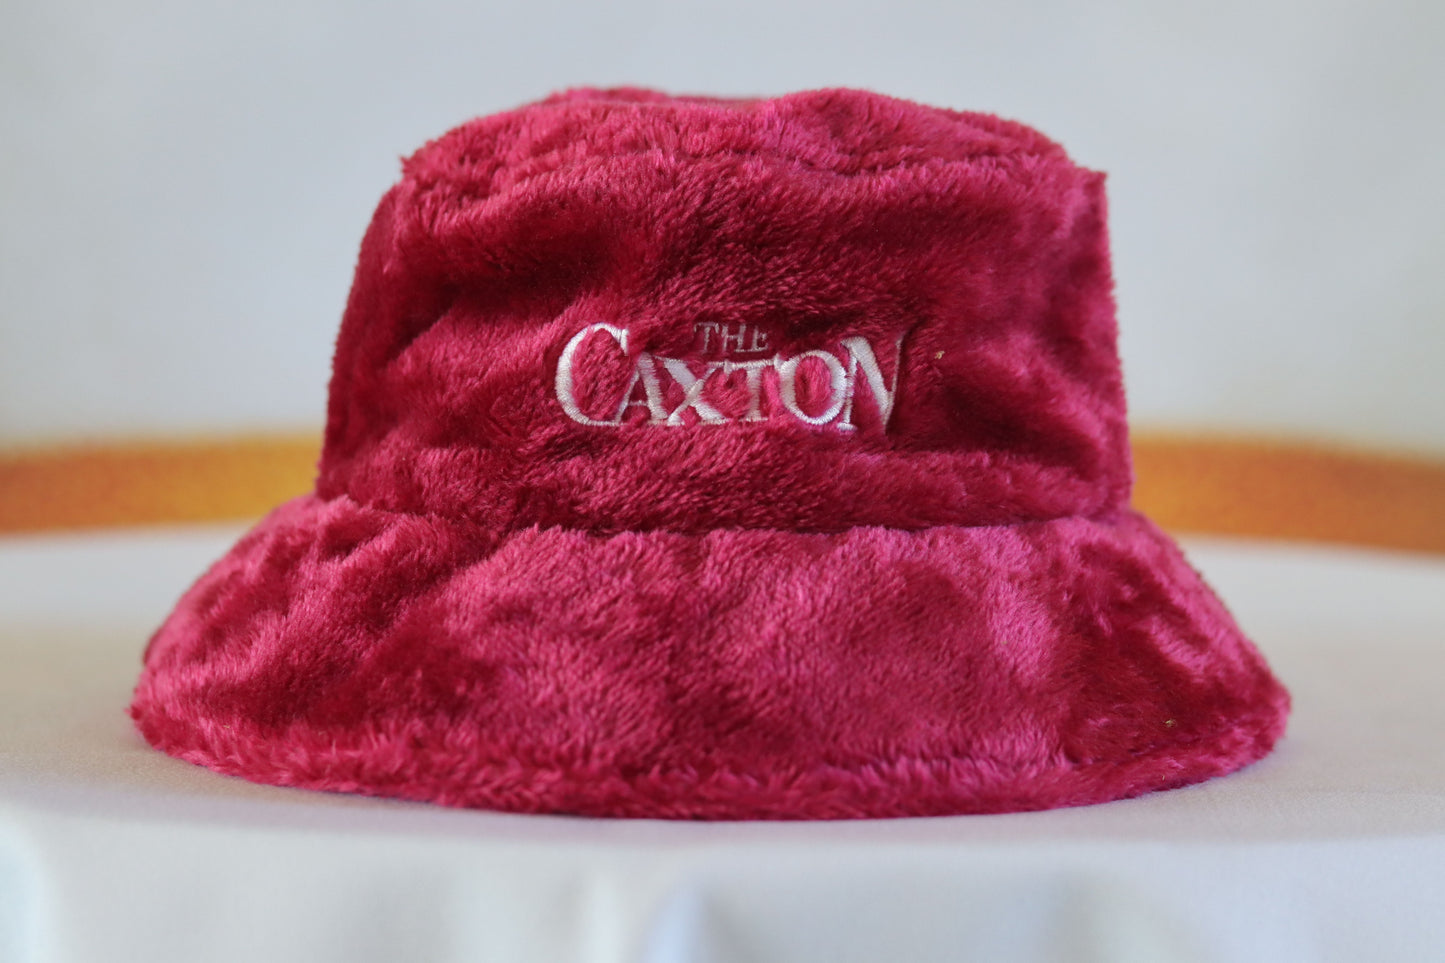 Caxton "QLDER!" Fluffy Bucket Hat in Maroon